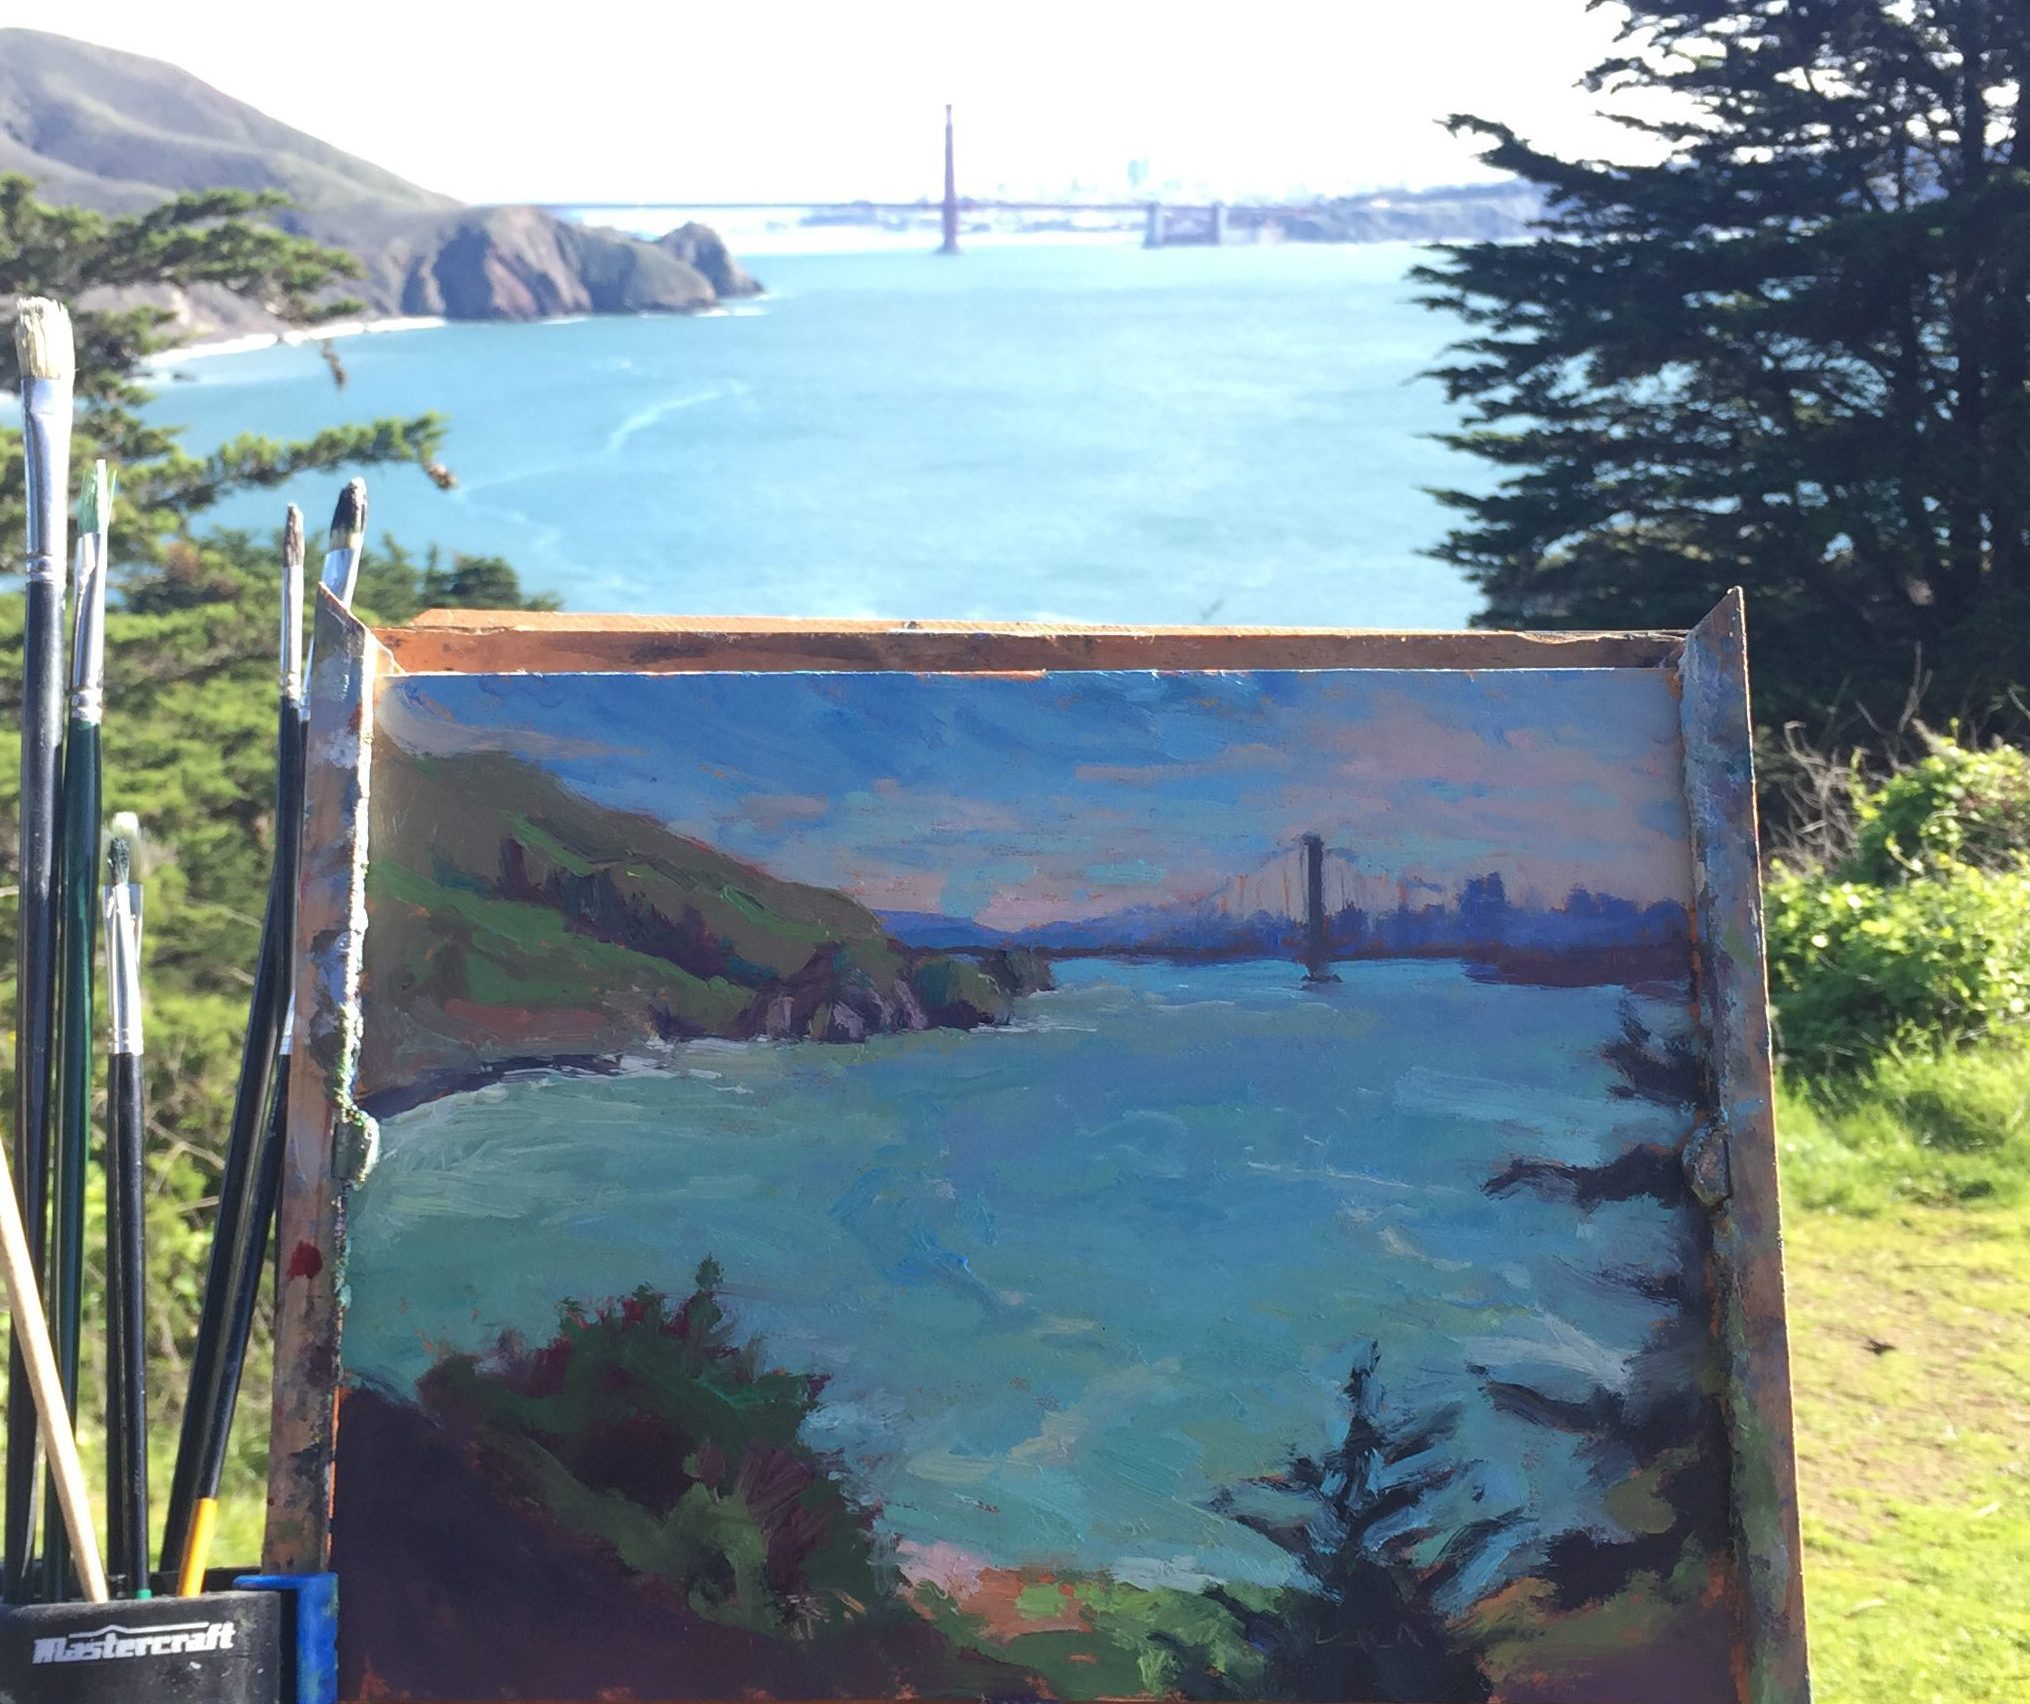 Golden Gate from a distance